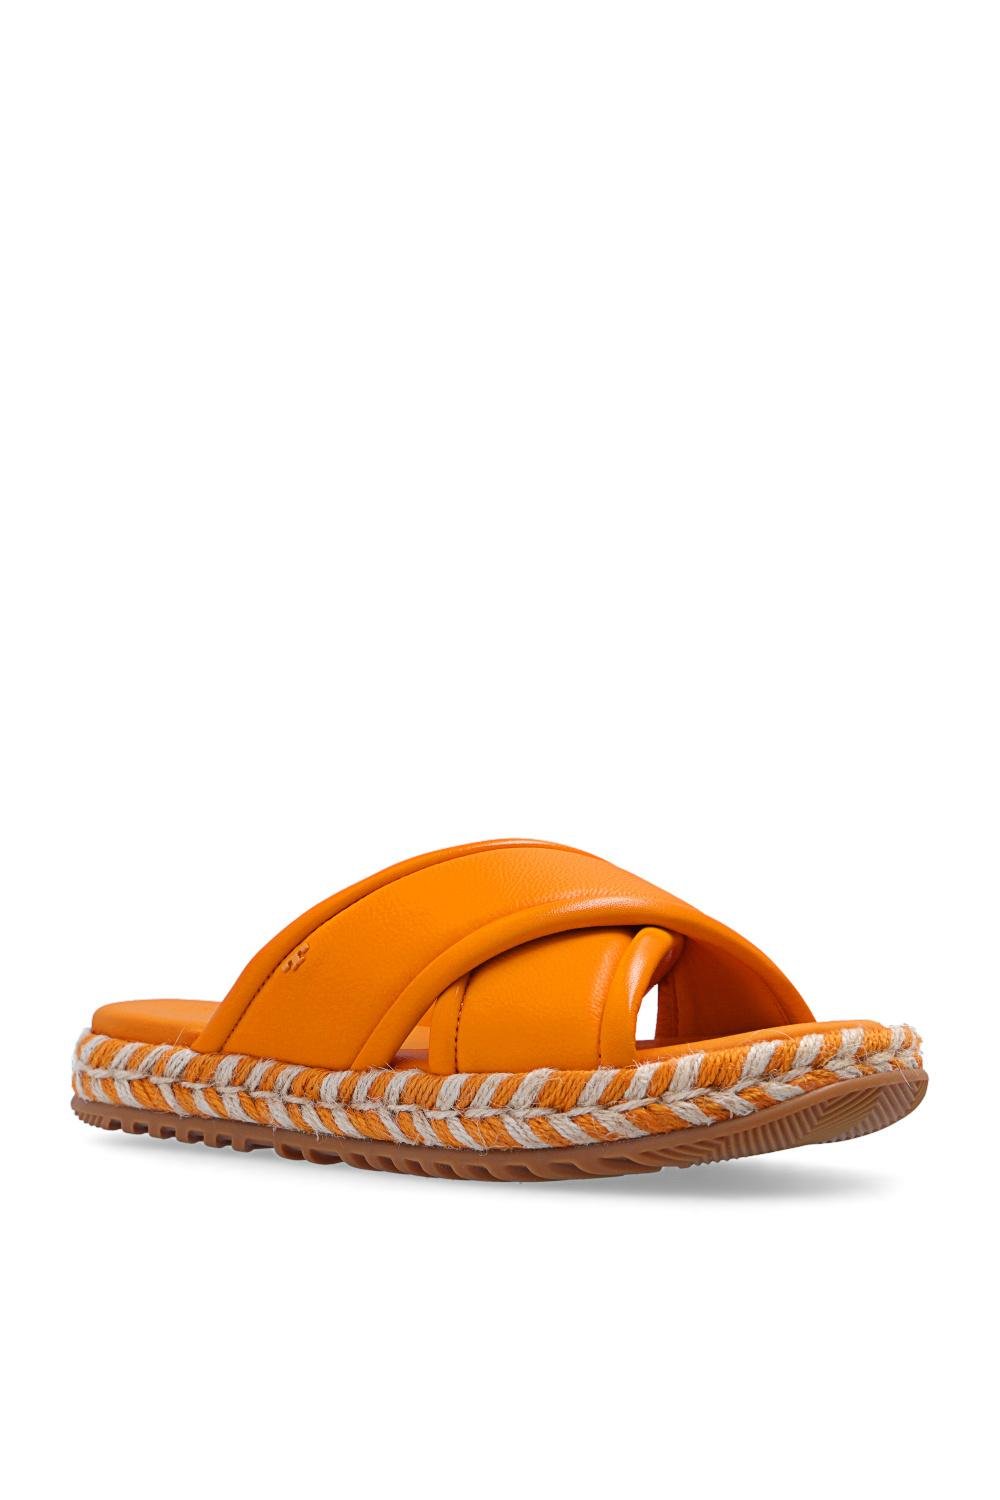 Tory Burch 'crisscross' Leather Slides in Orange | Lyst